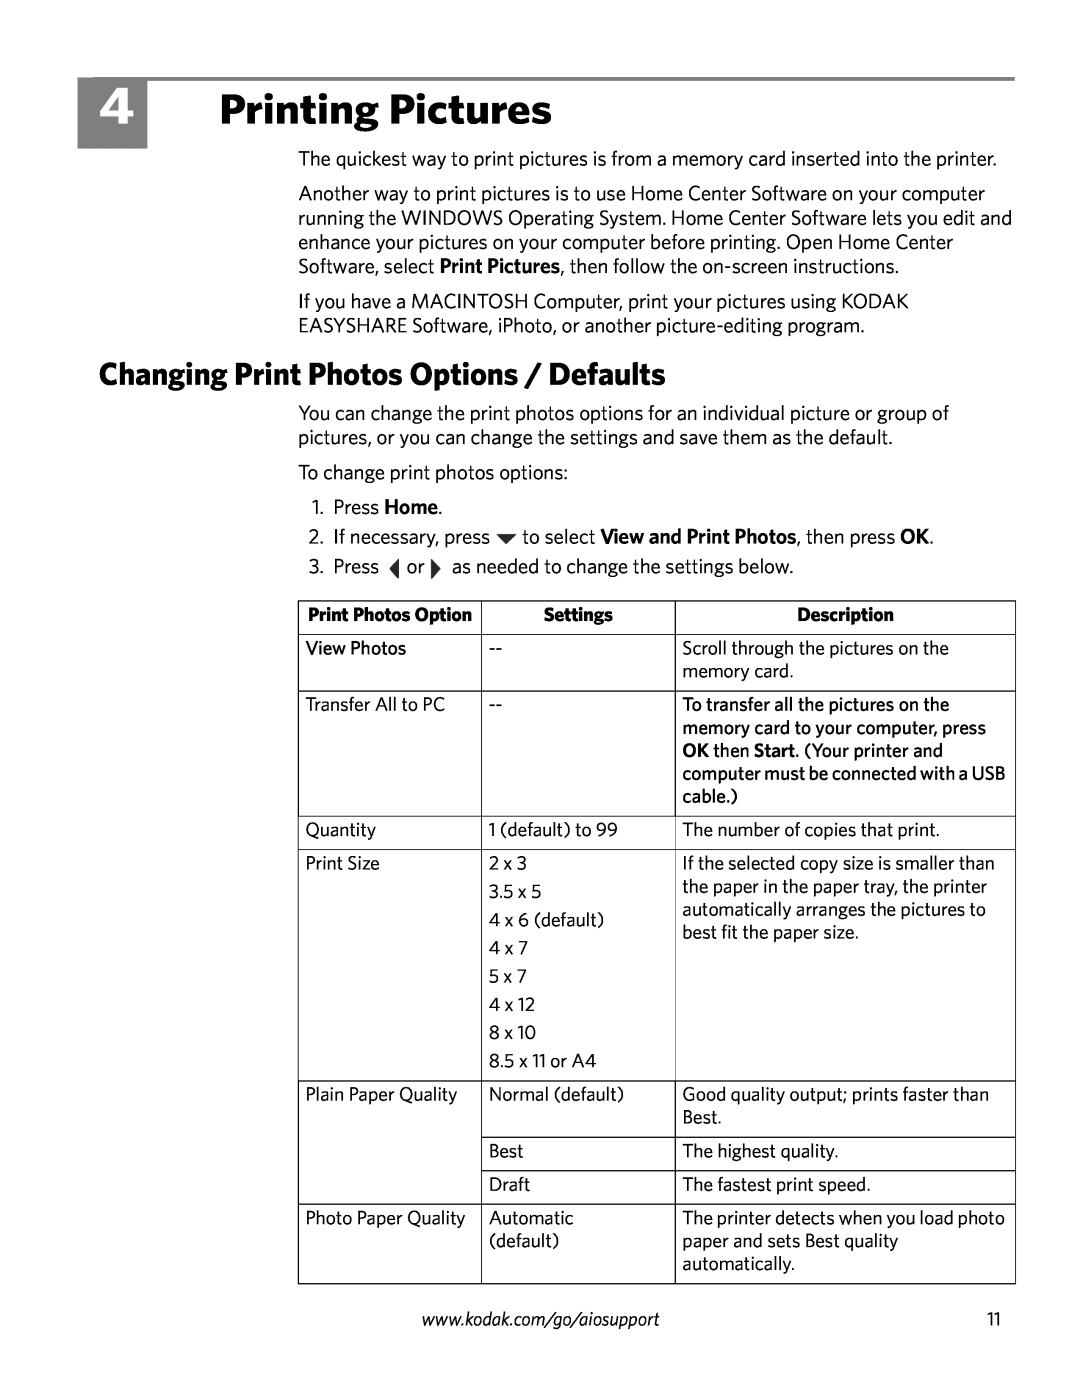 Kodak ESP 3250, ESP 3260, ESP 3200 Series manual Printing Pictures, Changing Print Photos Options / Defaults 